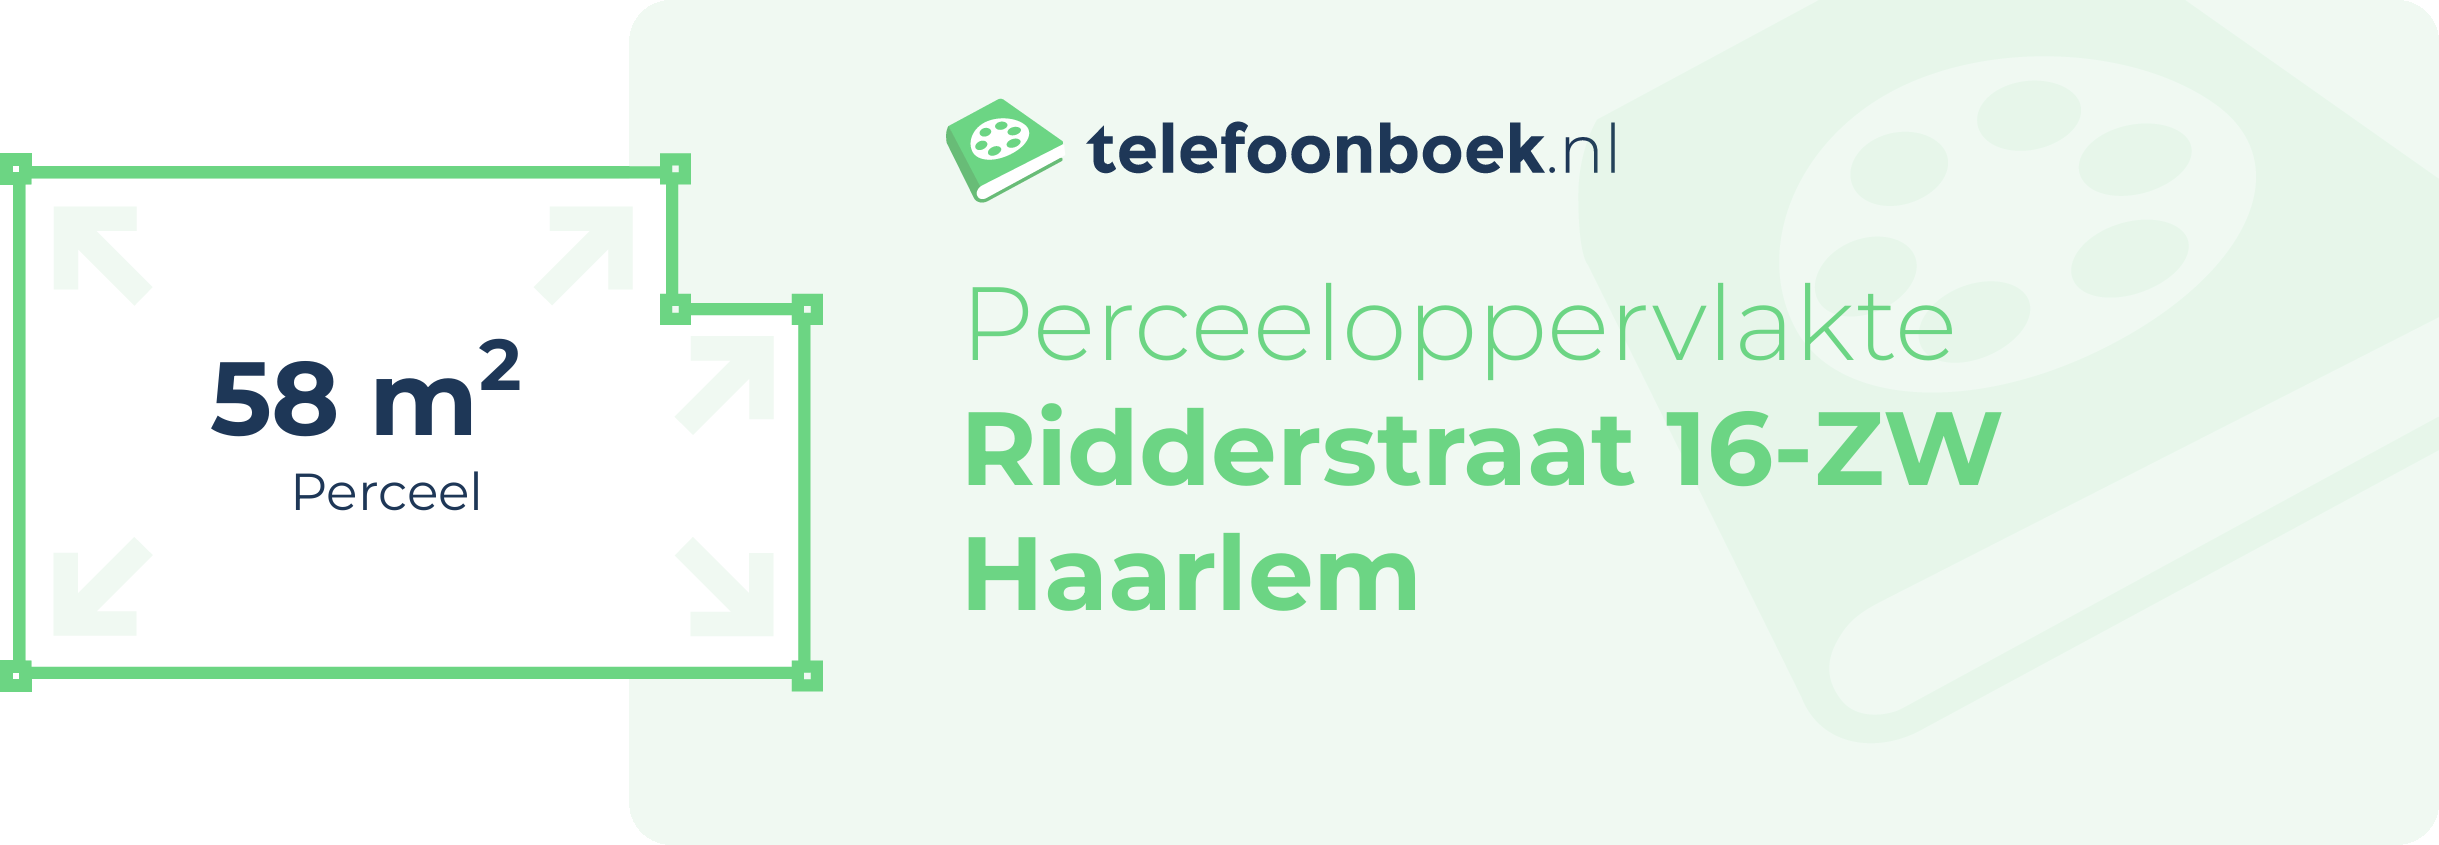 Perceeloppervlakte Ridderstraat 16-ZW Haarlem